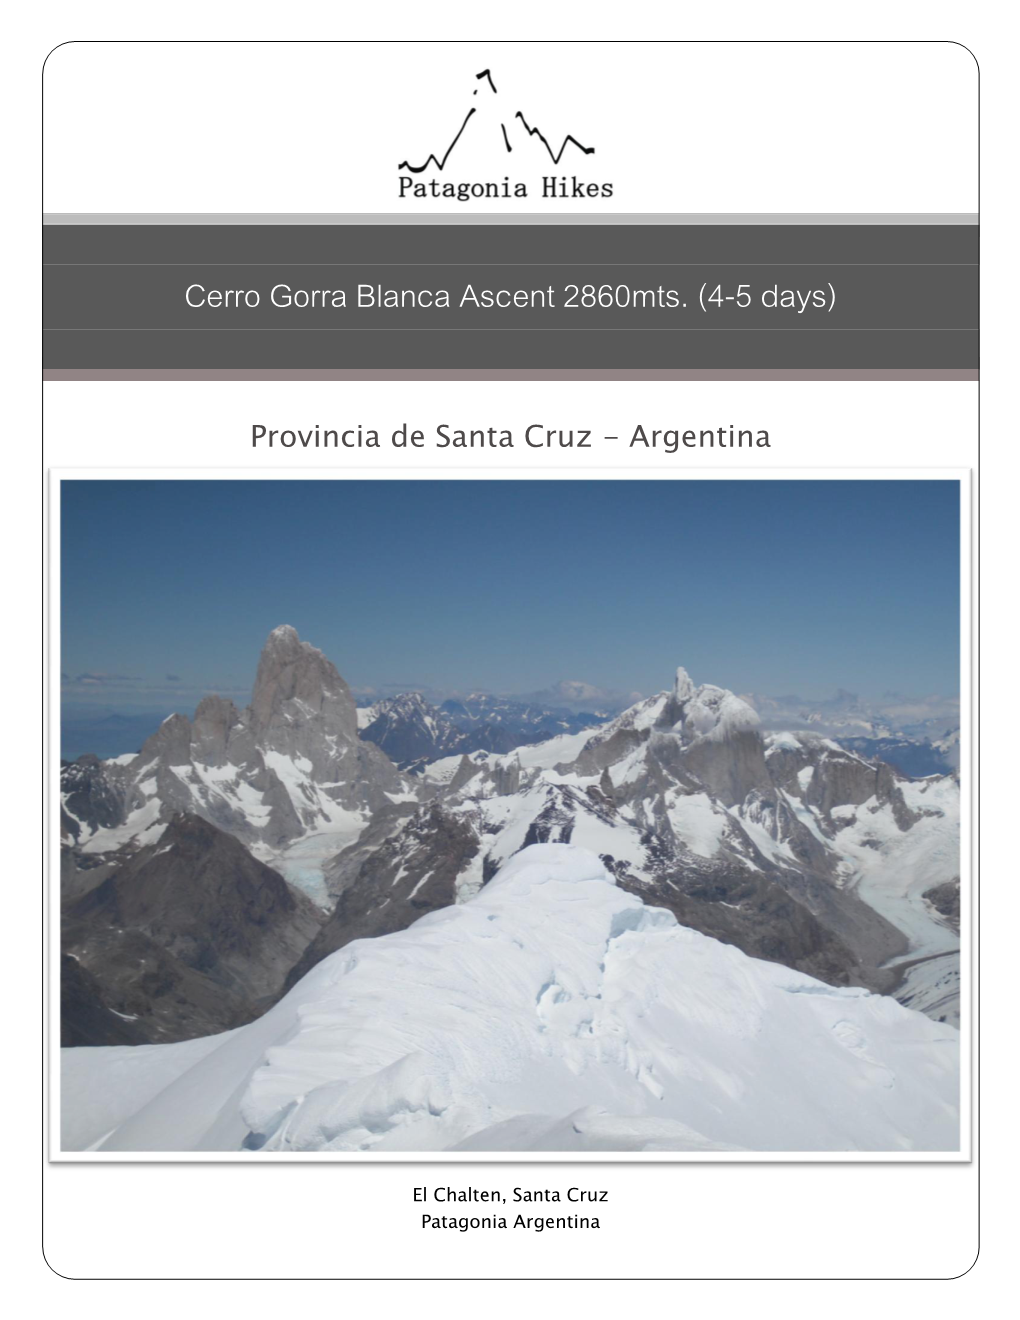 Cerro Gorra Blanca Ascent 2860Mts. (4-5 Days)